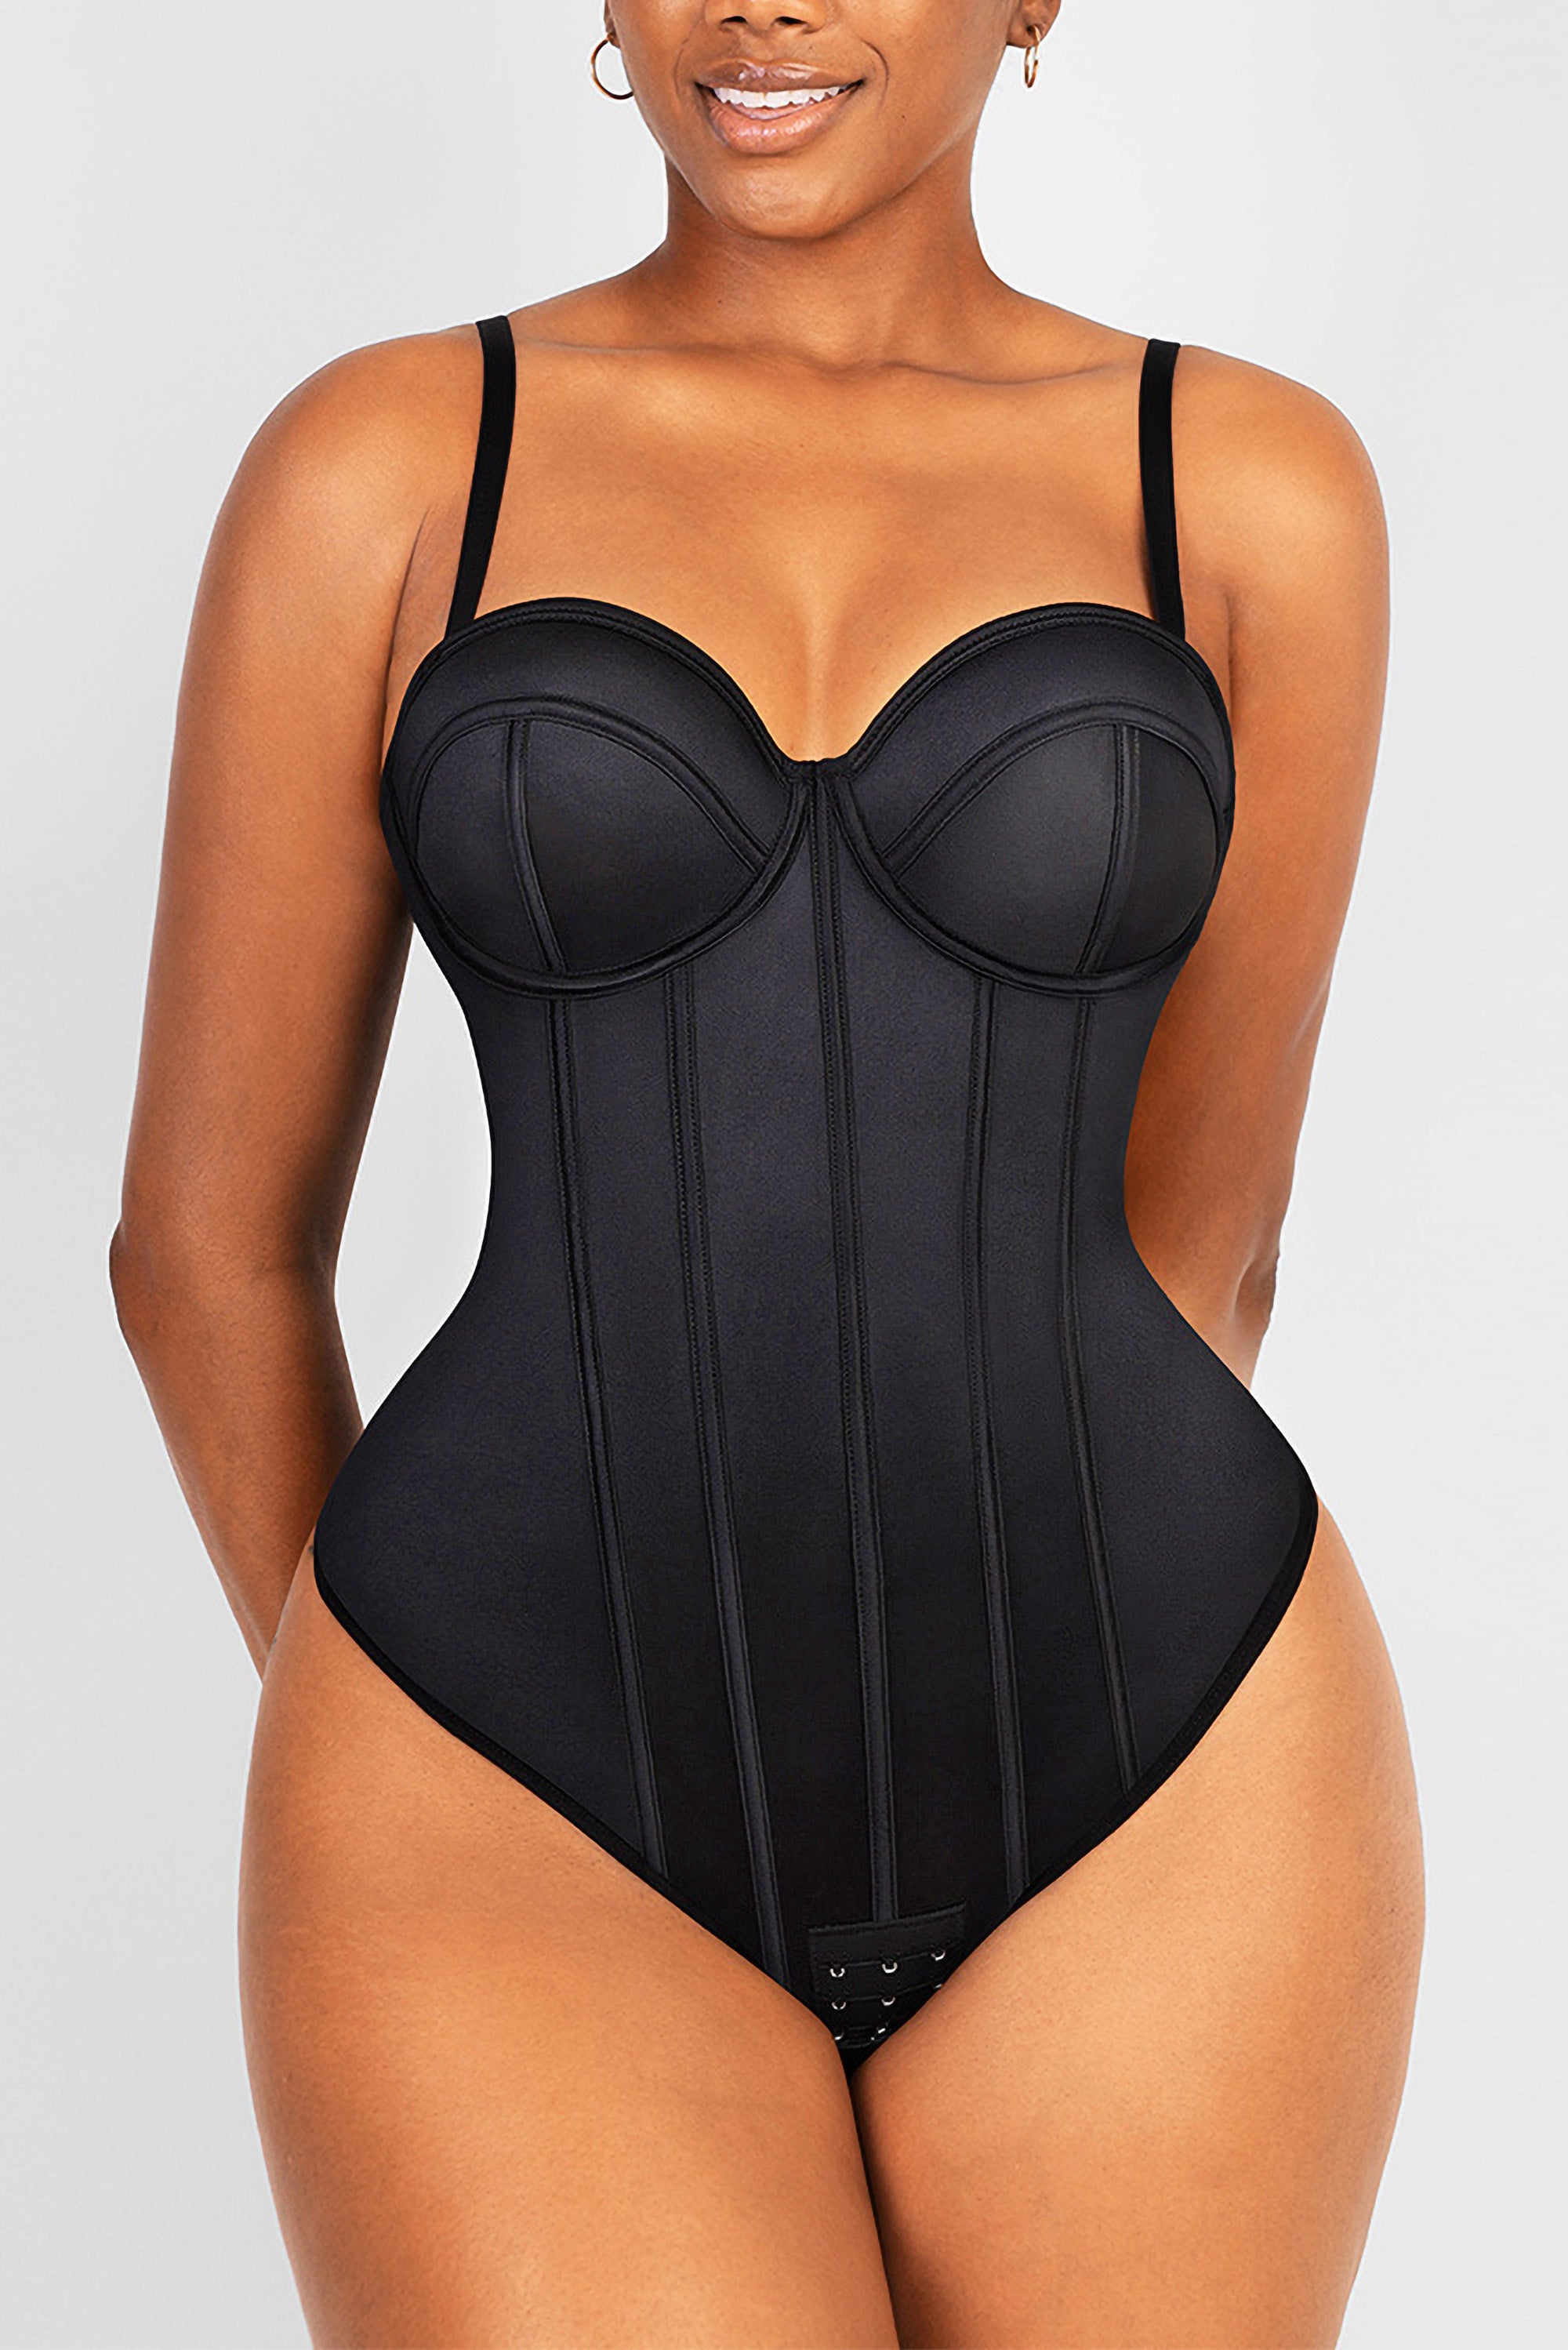 colsie bodysuit Black Size XS - $15 (40% Off Retail) - From caroline